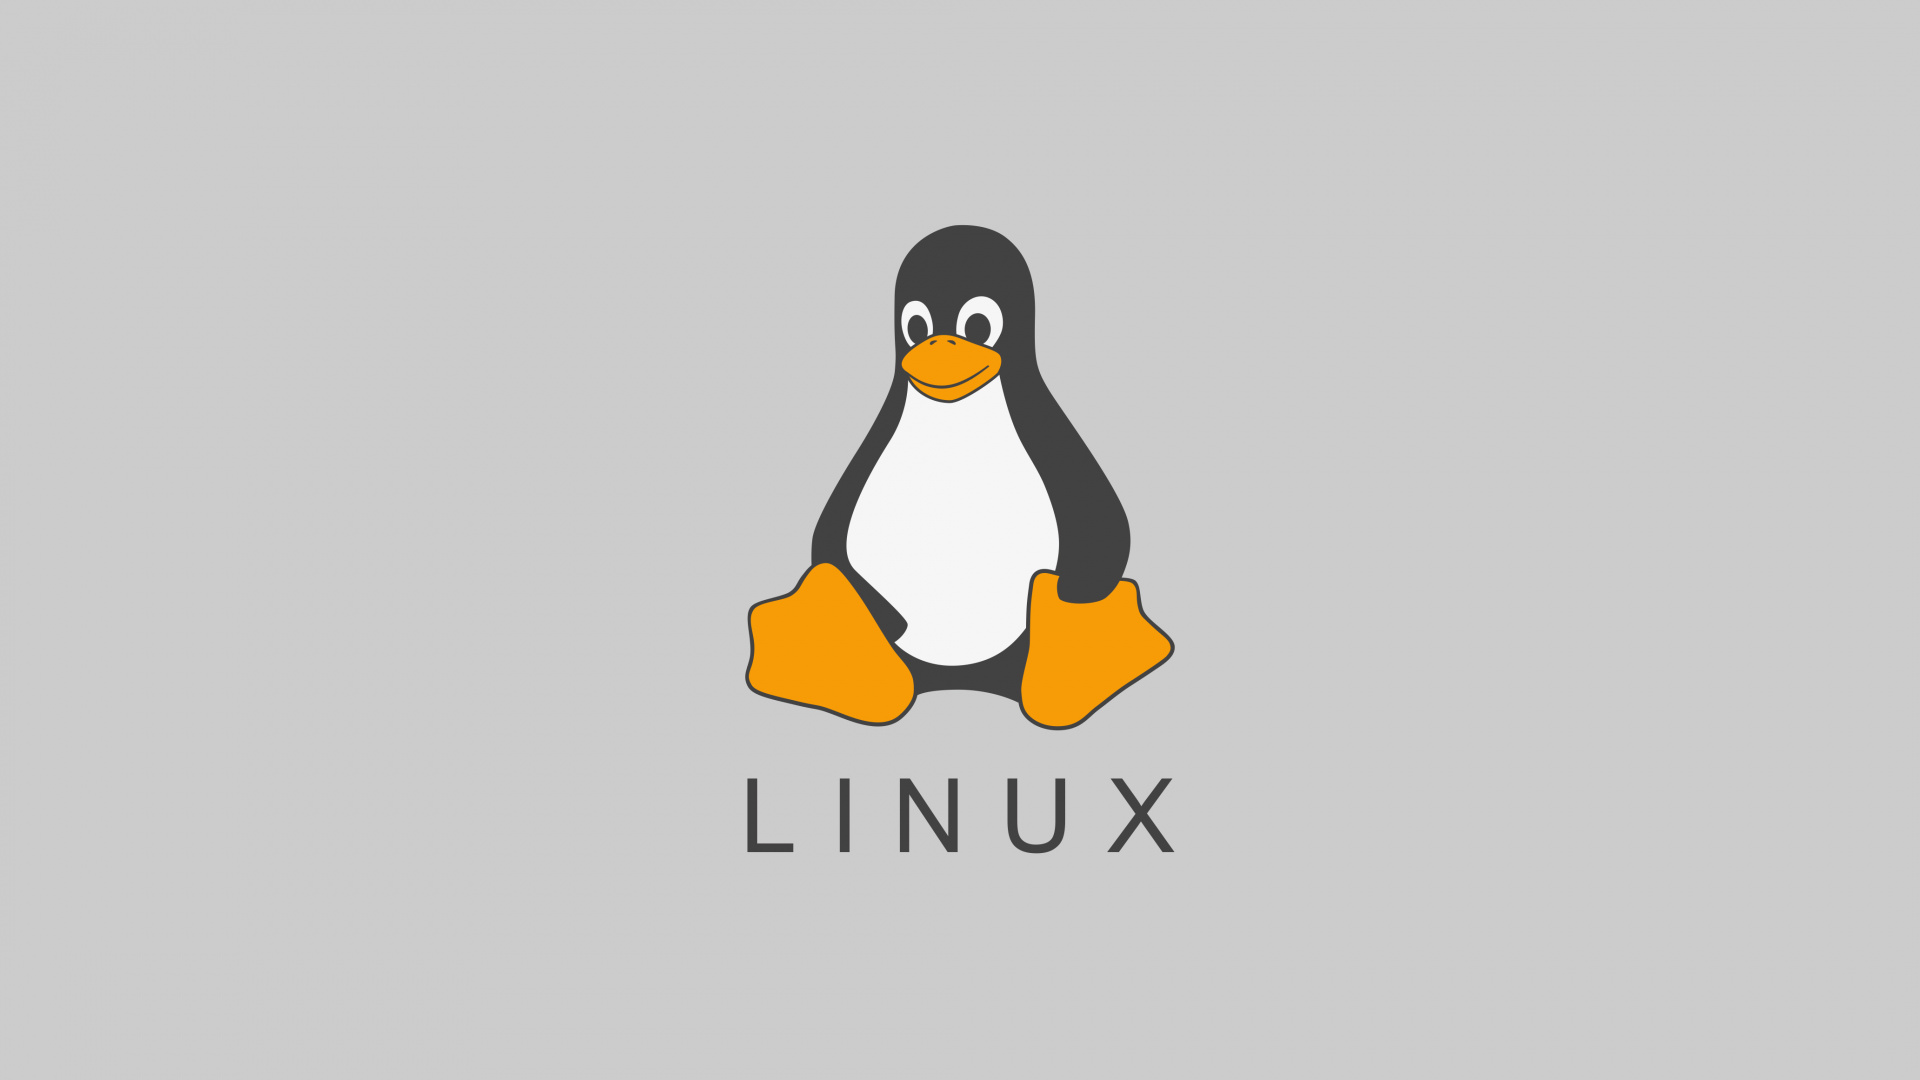 Linux, 晚礼服, Ubuntu, 不会飞的鸟, 鸟 壁纸 1920x1080 允许